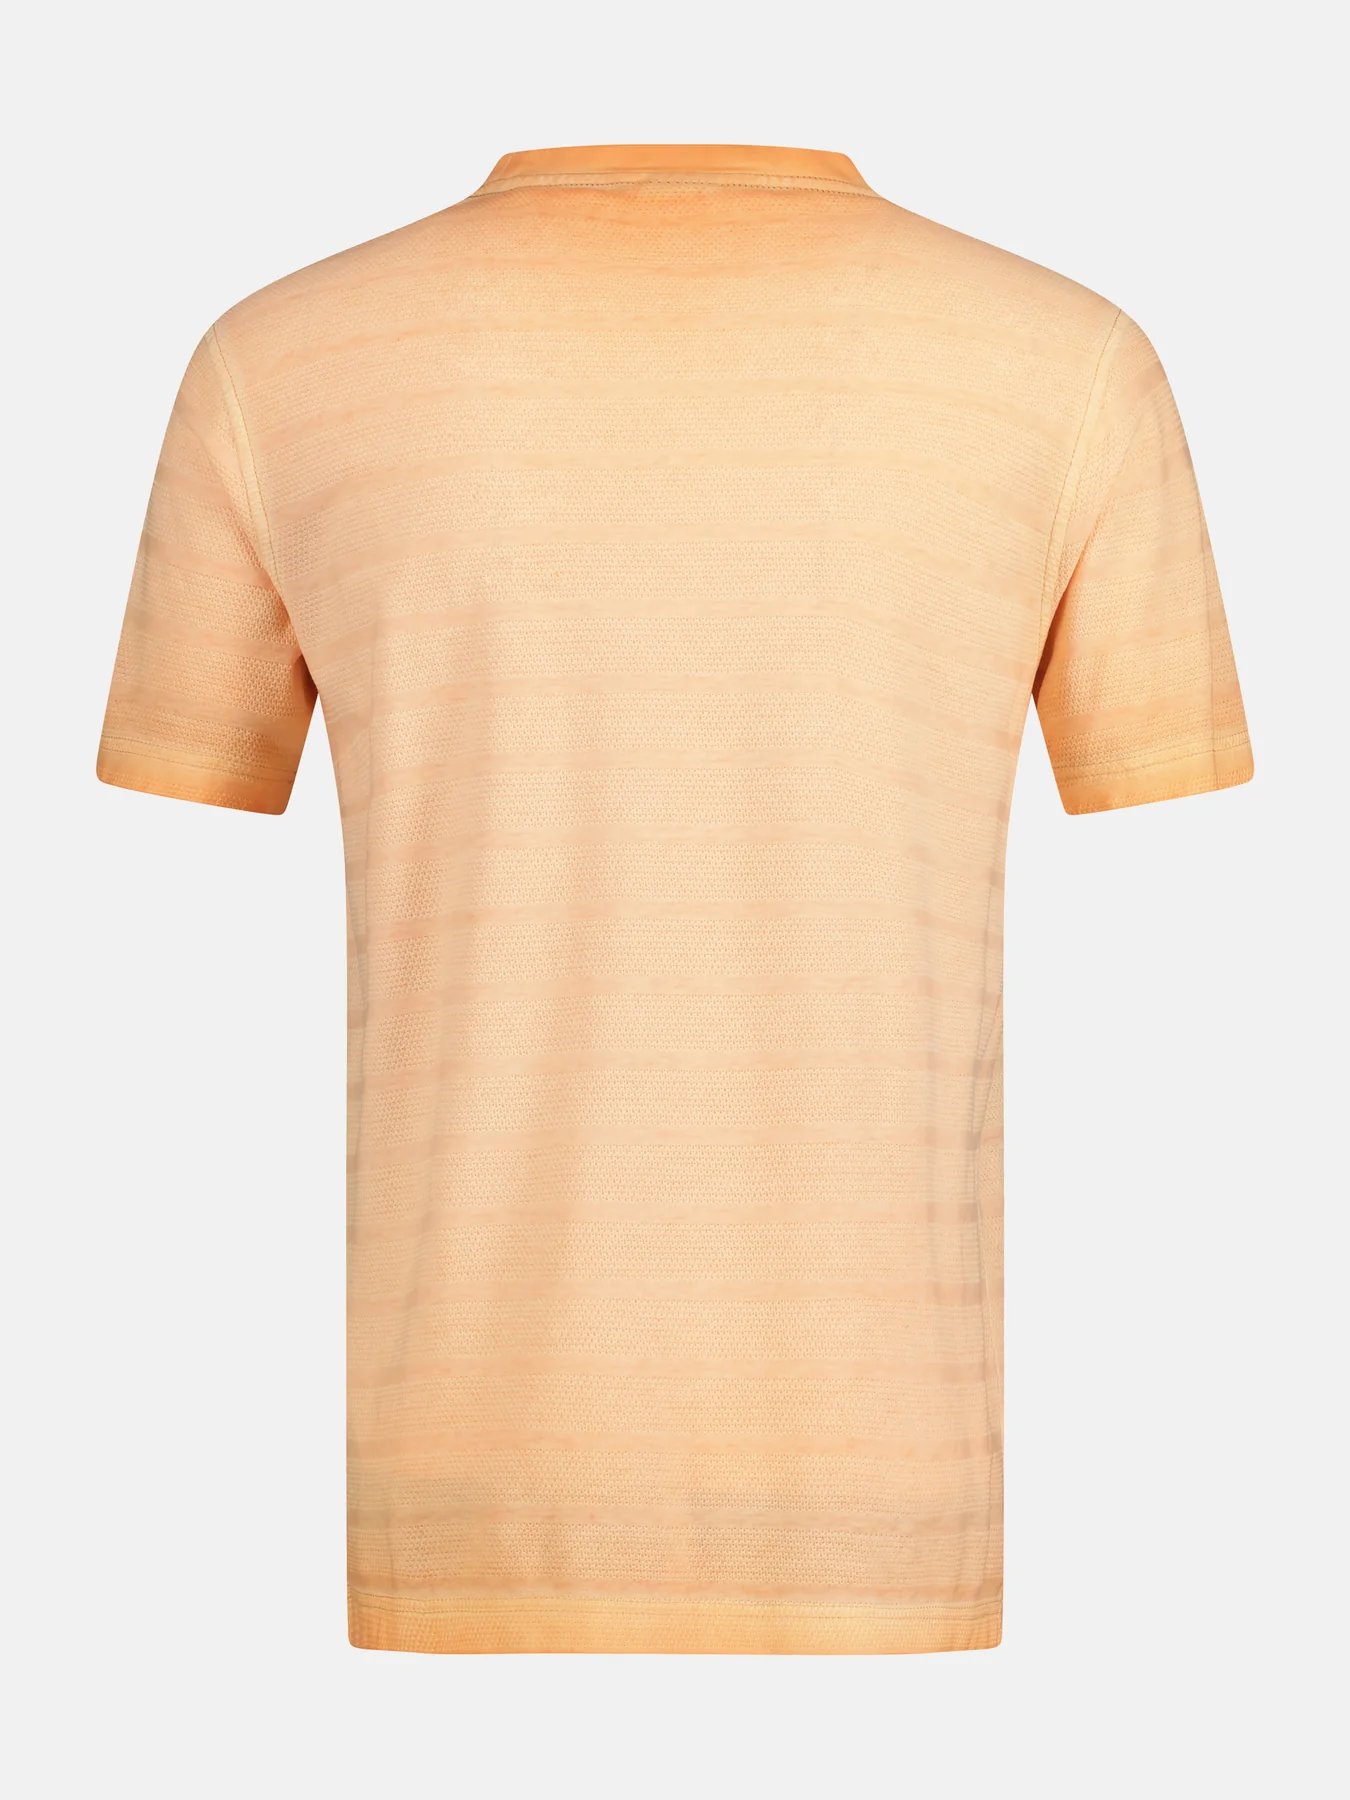 LERROS T-Shirt with Peach Stripe Cotton | - Structure Blues Gentle -